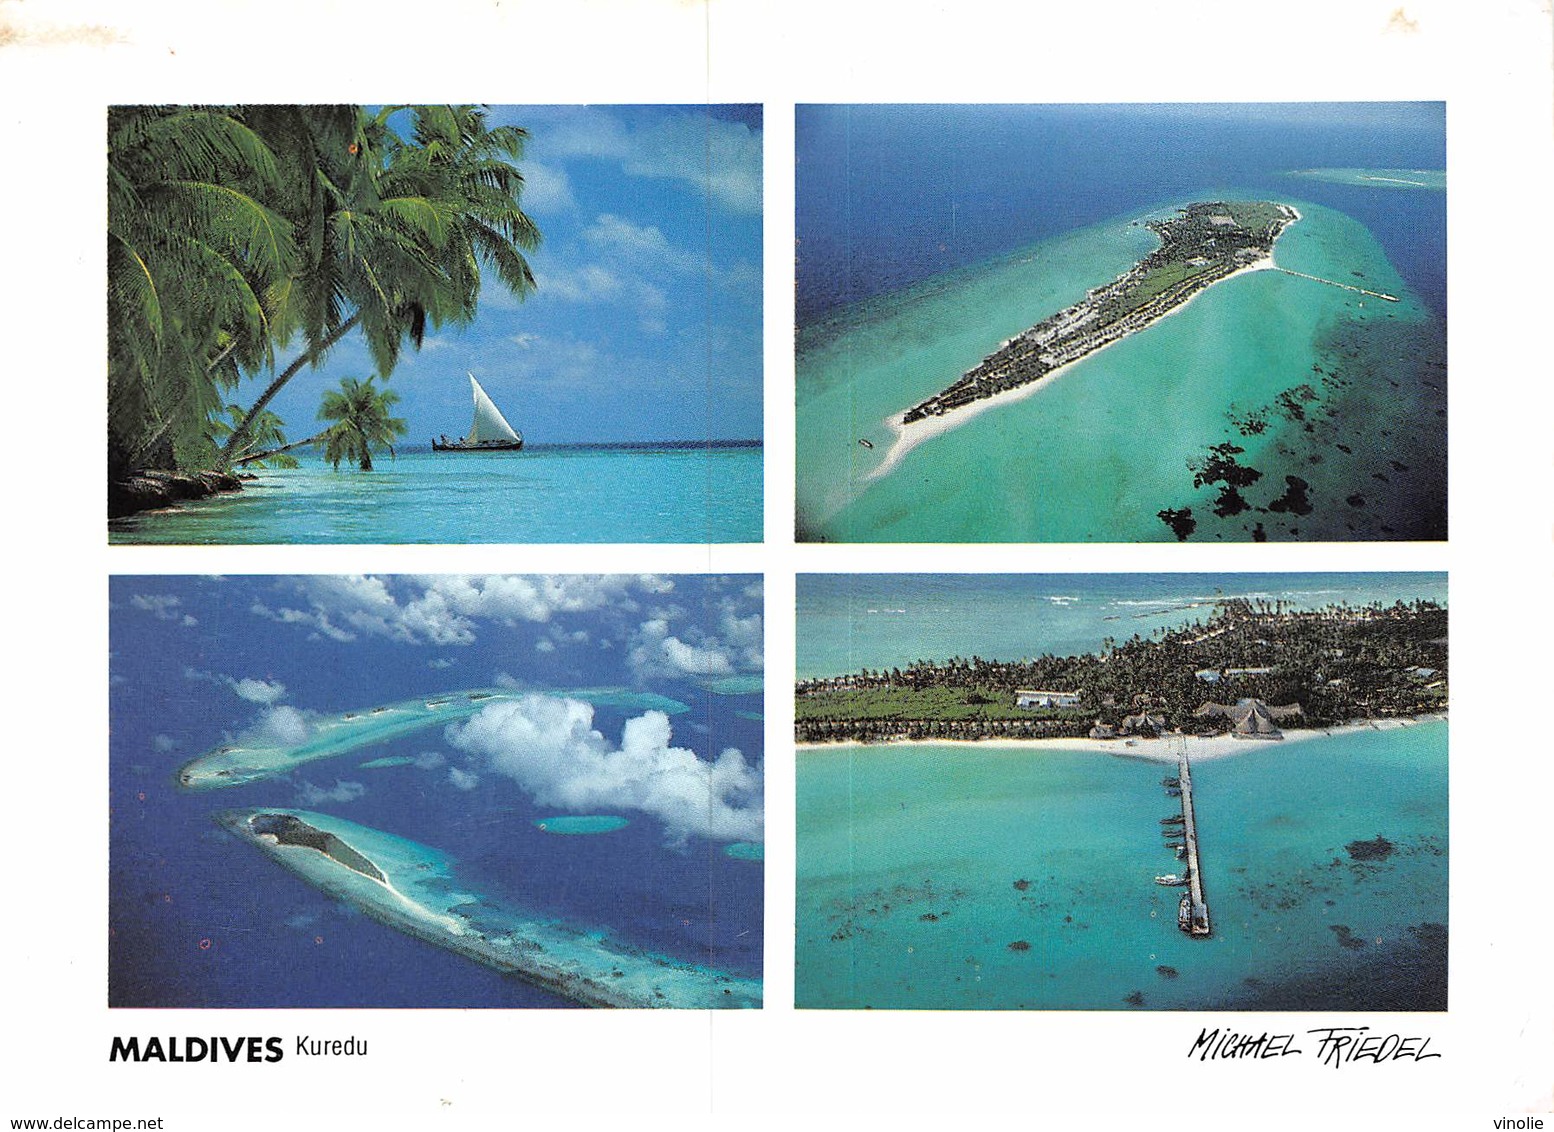 PIE-JmT-19-1605: MALDIVES. - Maldivas